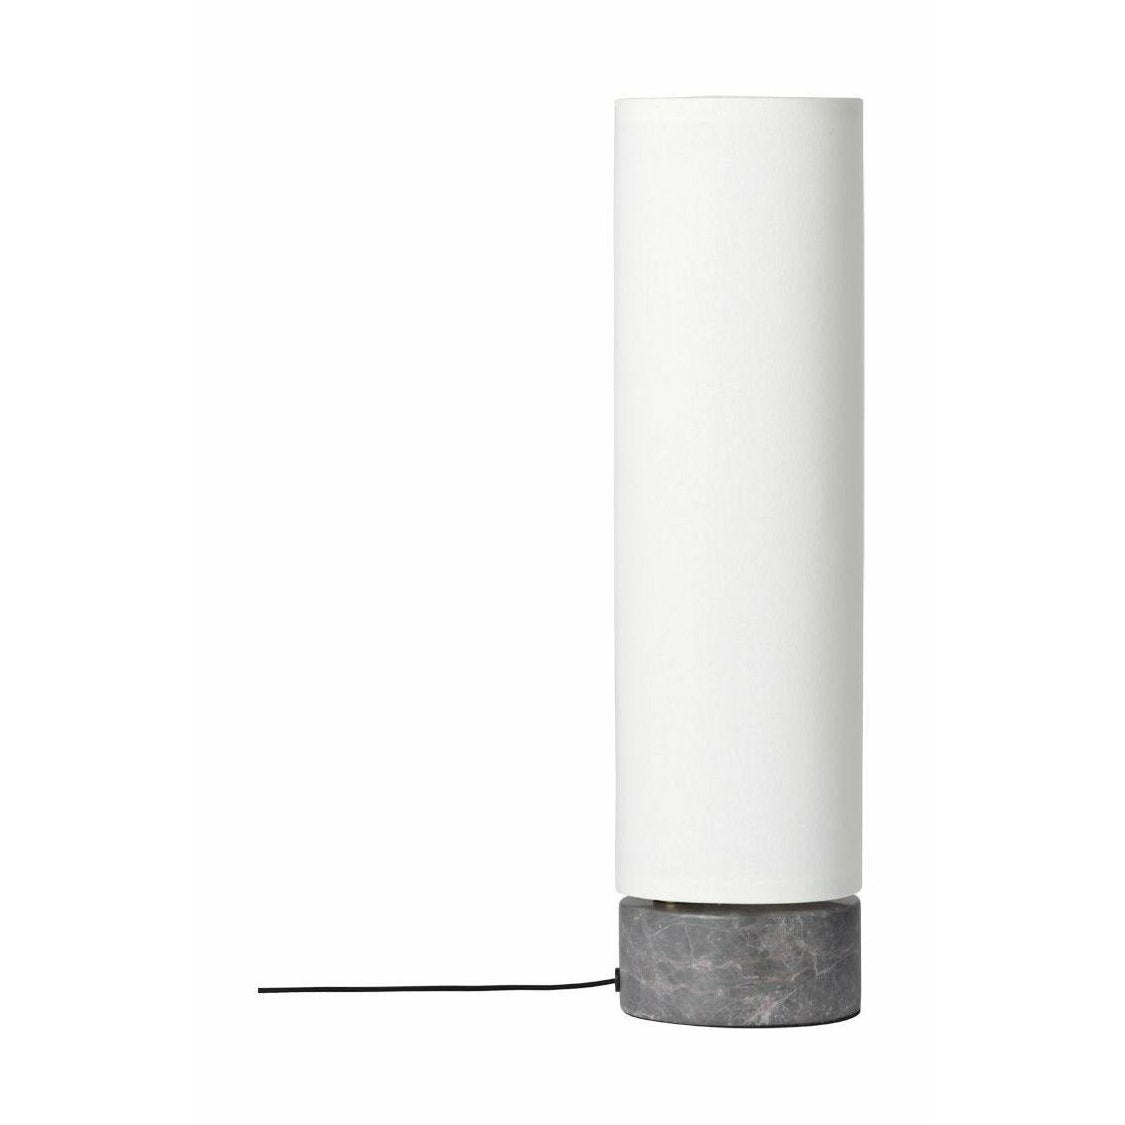 Gubi Obundet bordslampa Øx H 12x45, vit